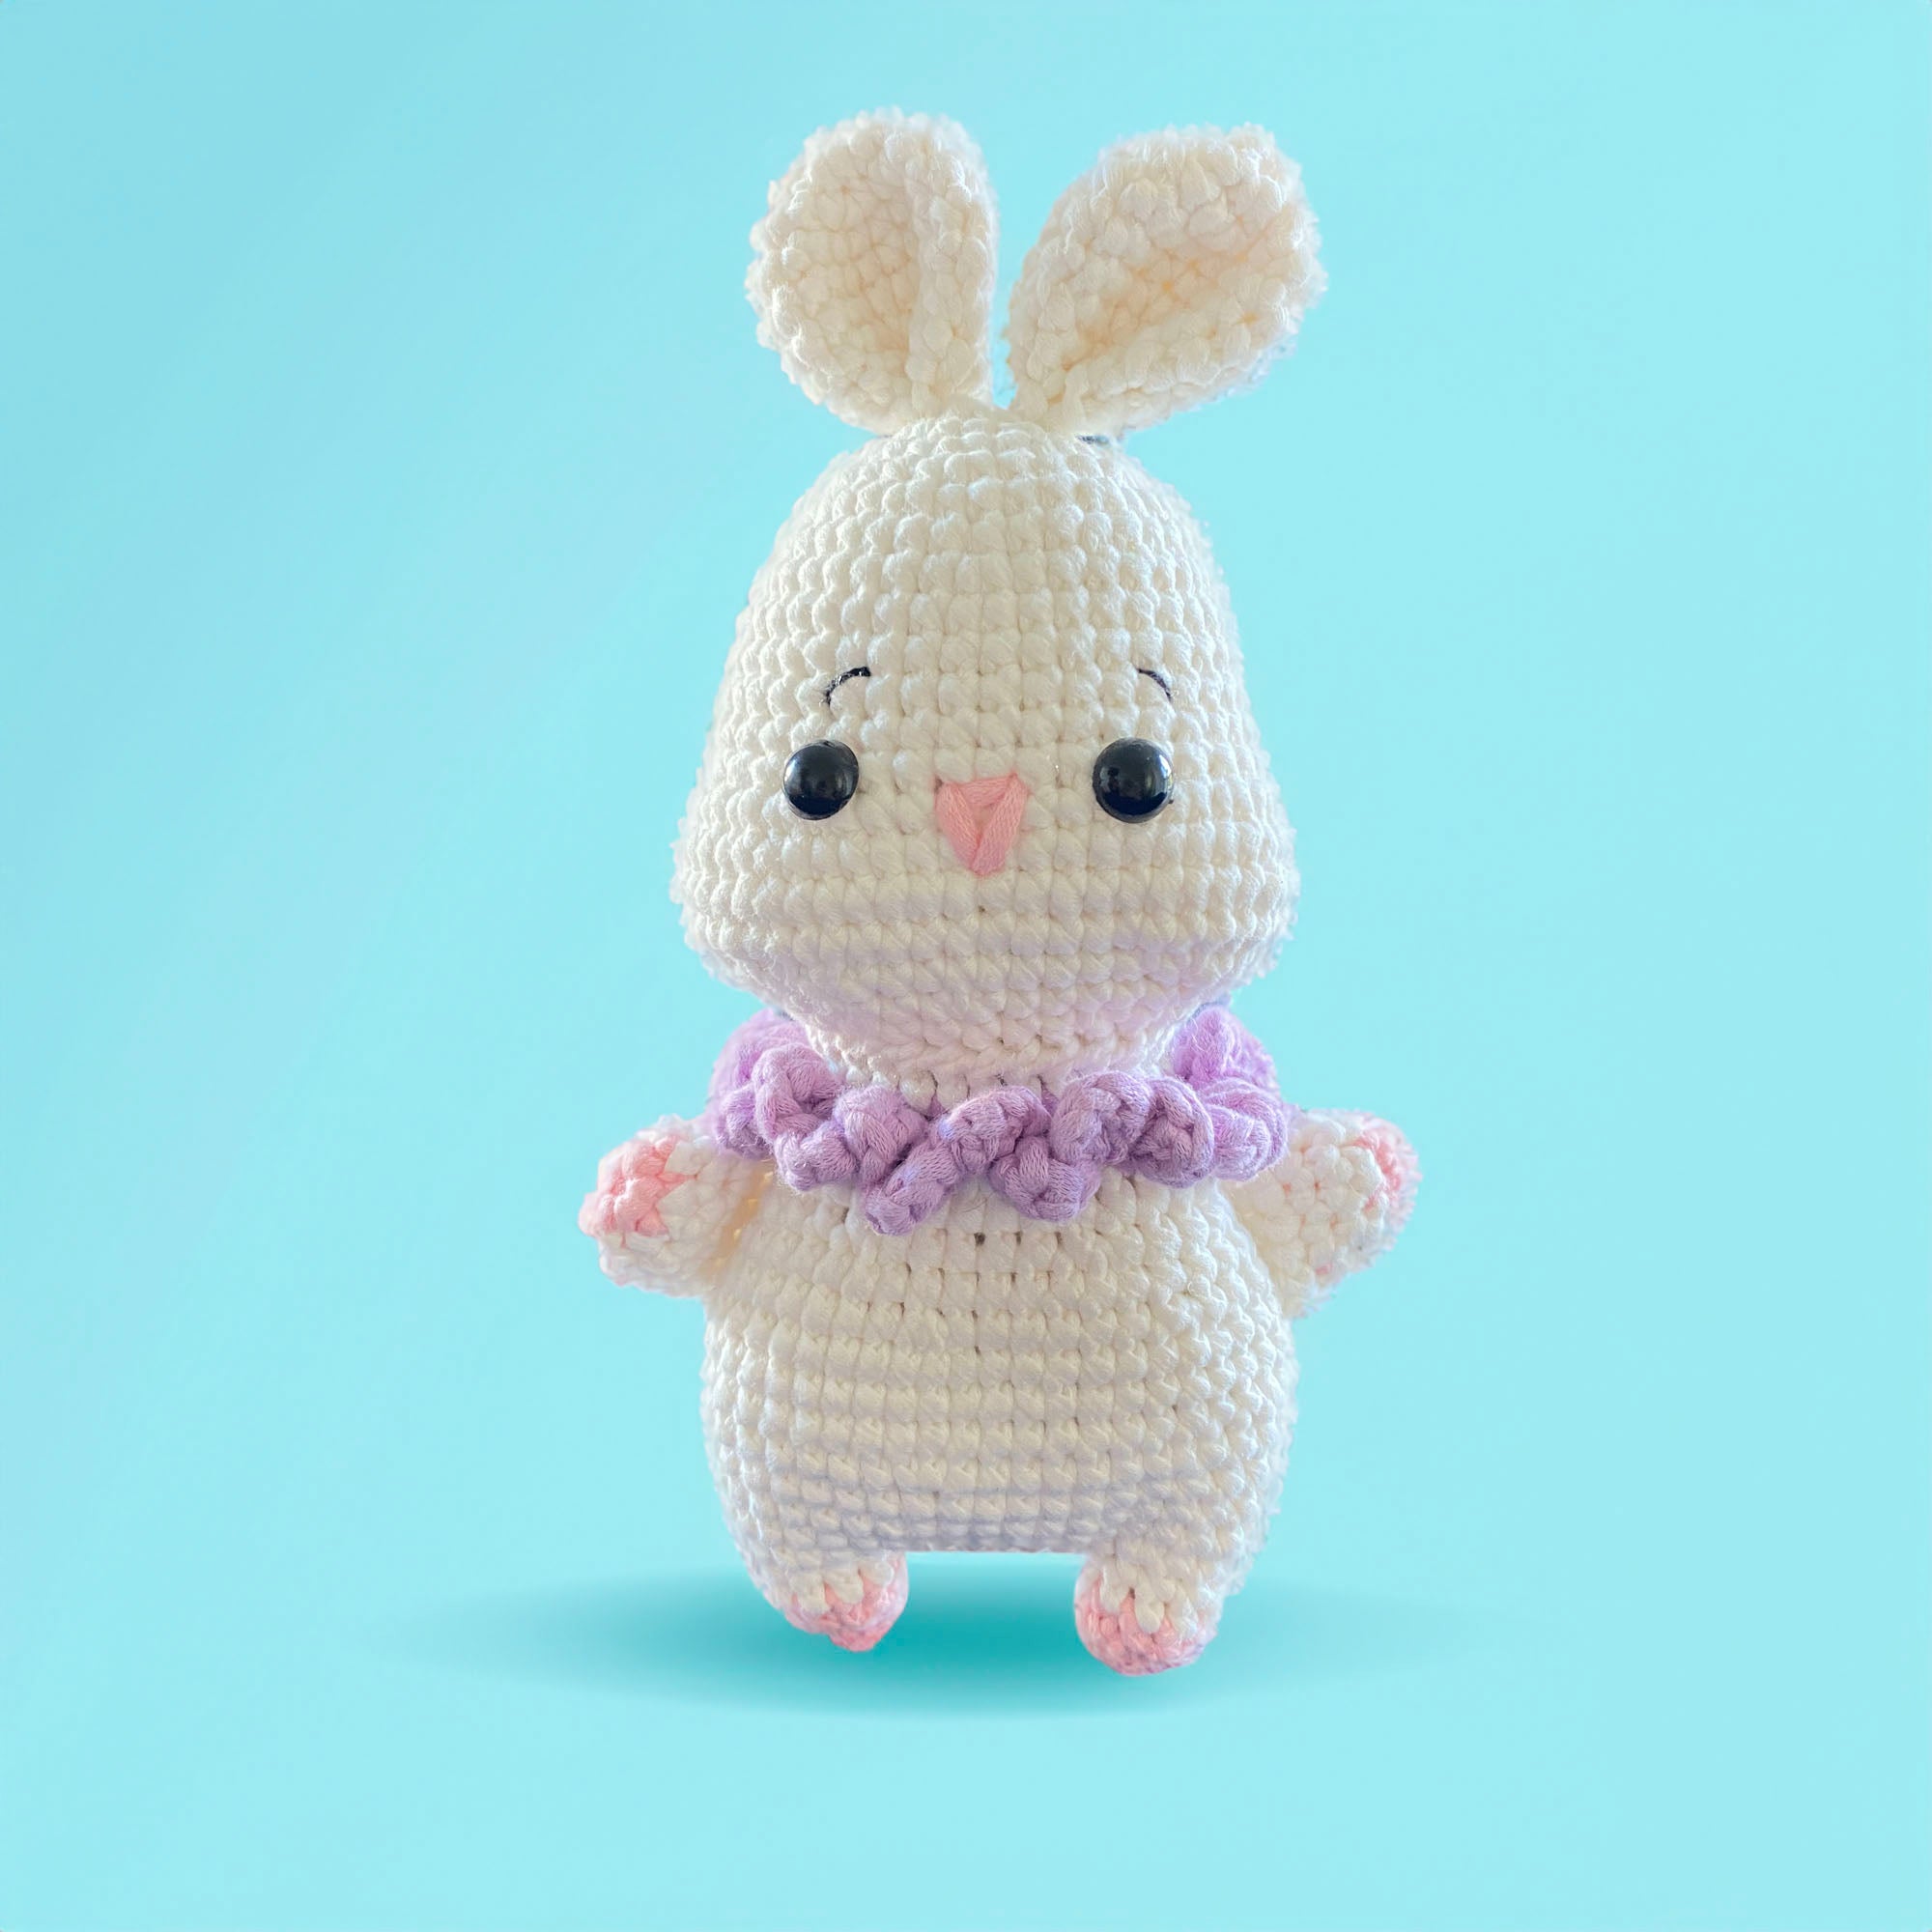 Kit de crochet : Lola le lapin